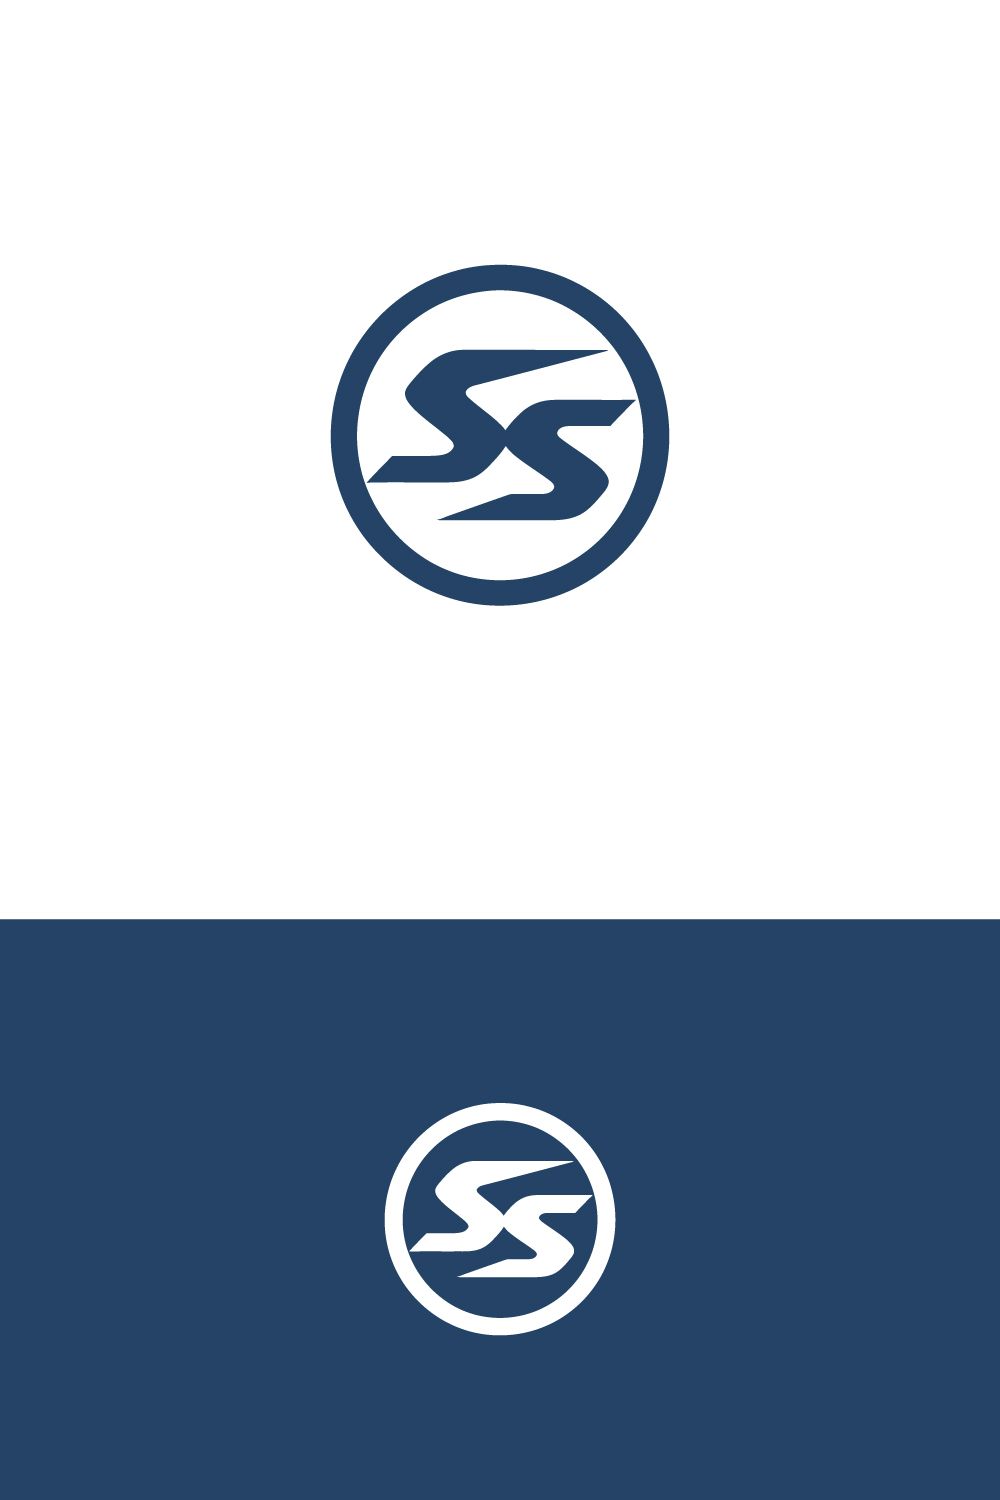 letters SS logo design pinterest preview image.